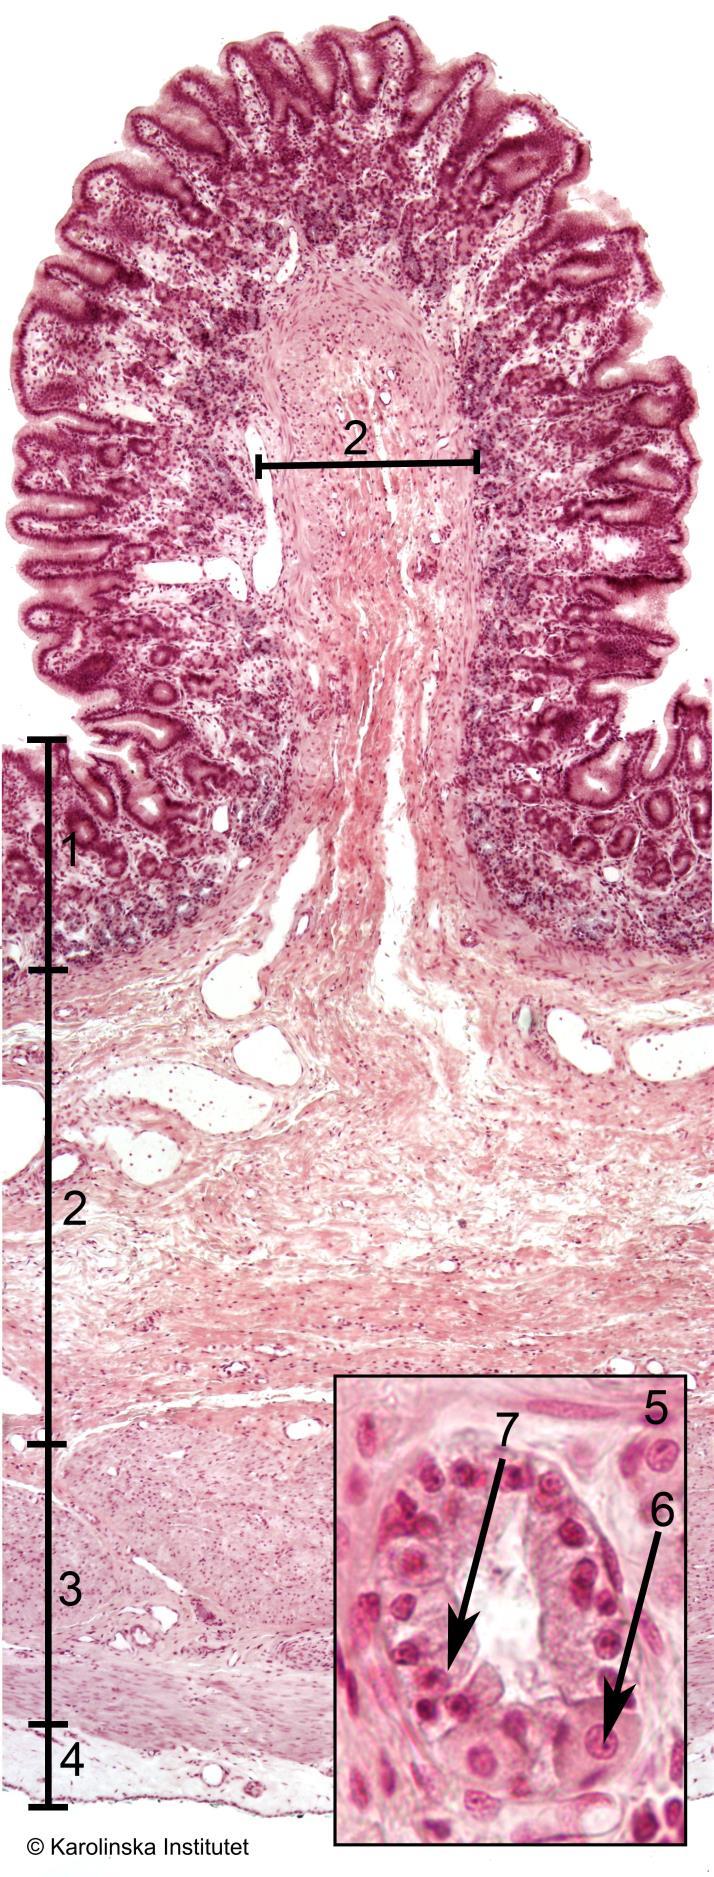 56. Ventriculus, pars corpus fundus Htx-eosin 1. Tunica mucosa (foveolae + hals + körtlar) 2. Tela submucosa 3. Tunica muscularis externa 4. Tunica fibrosa 5. Corpuskörtel 6. Parietalcell 7.